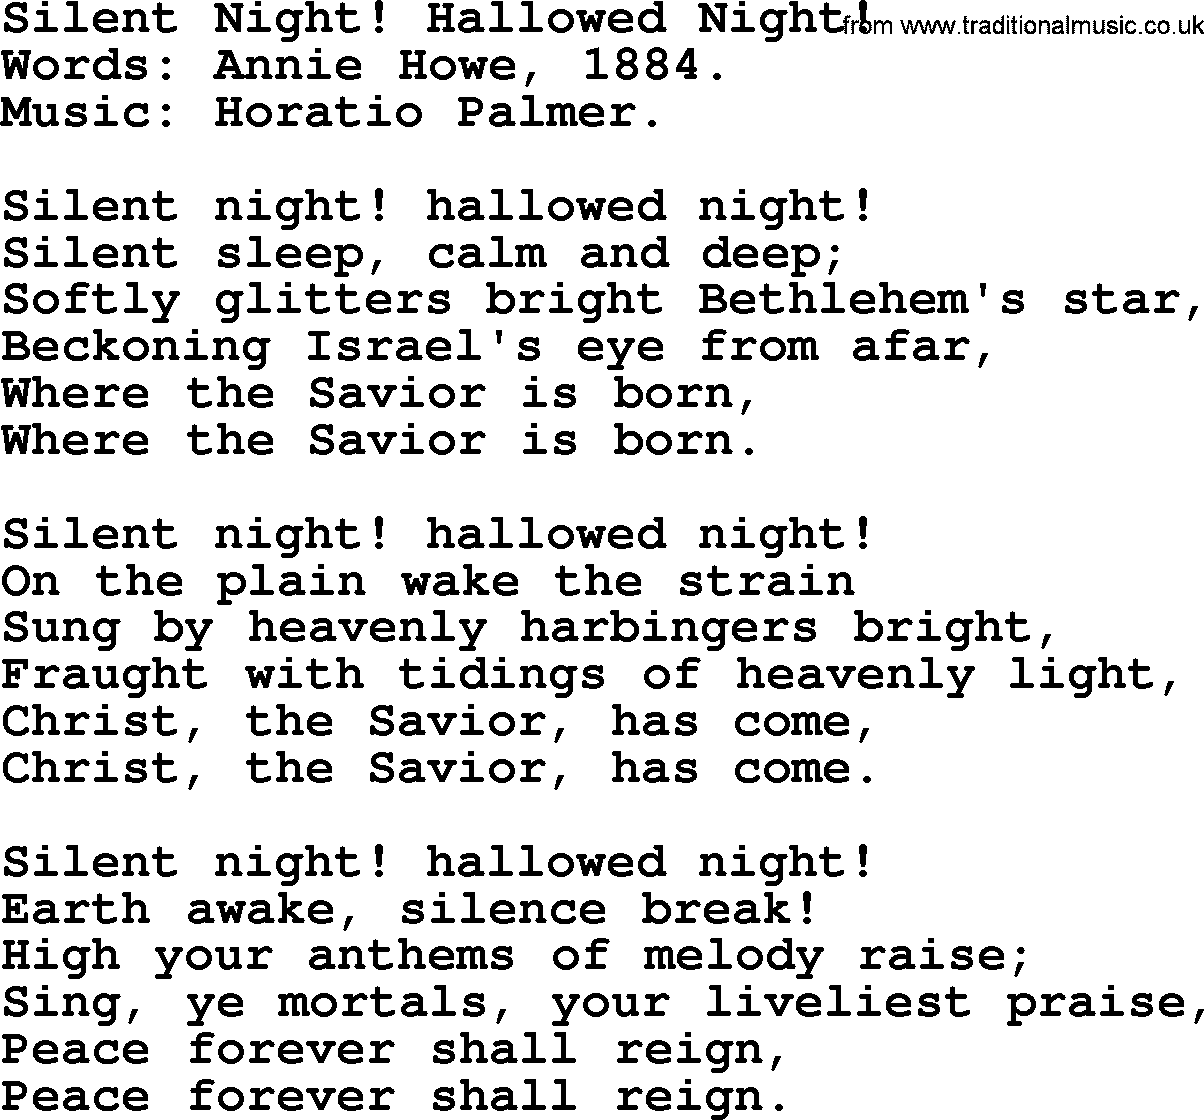 Christmas Hymns, Carols and Songs, title: Silent Night! Hallowed Night!, lyrics with PDF